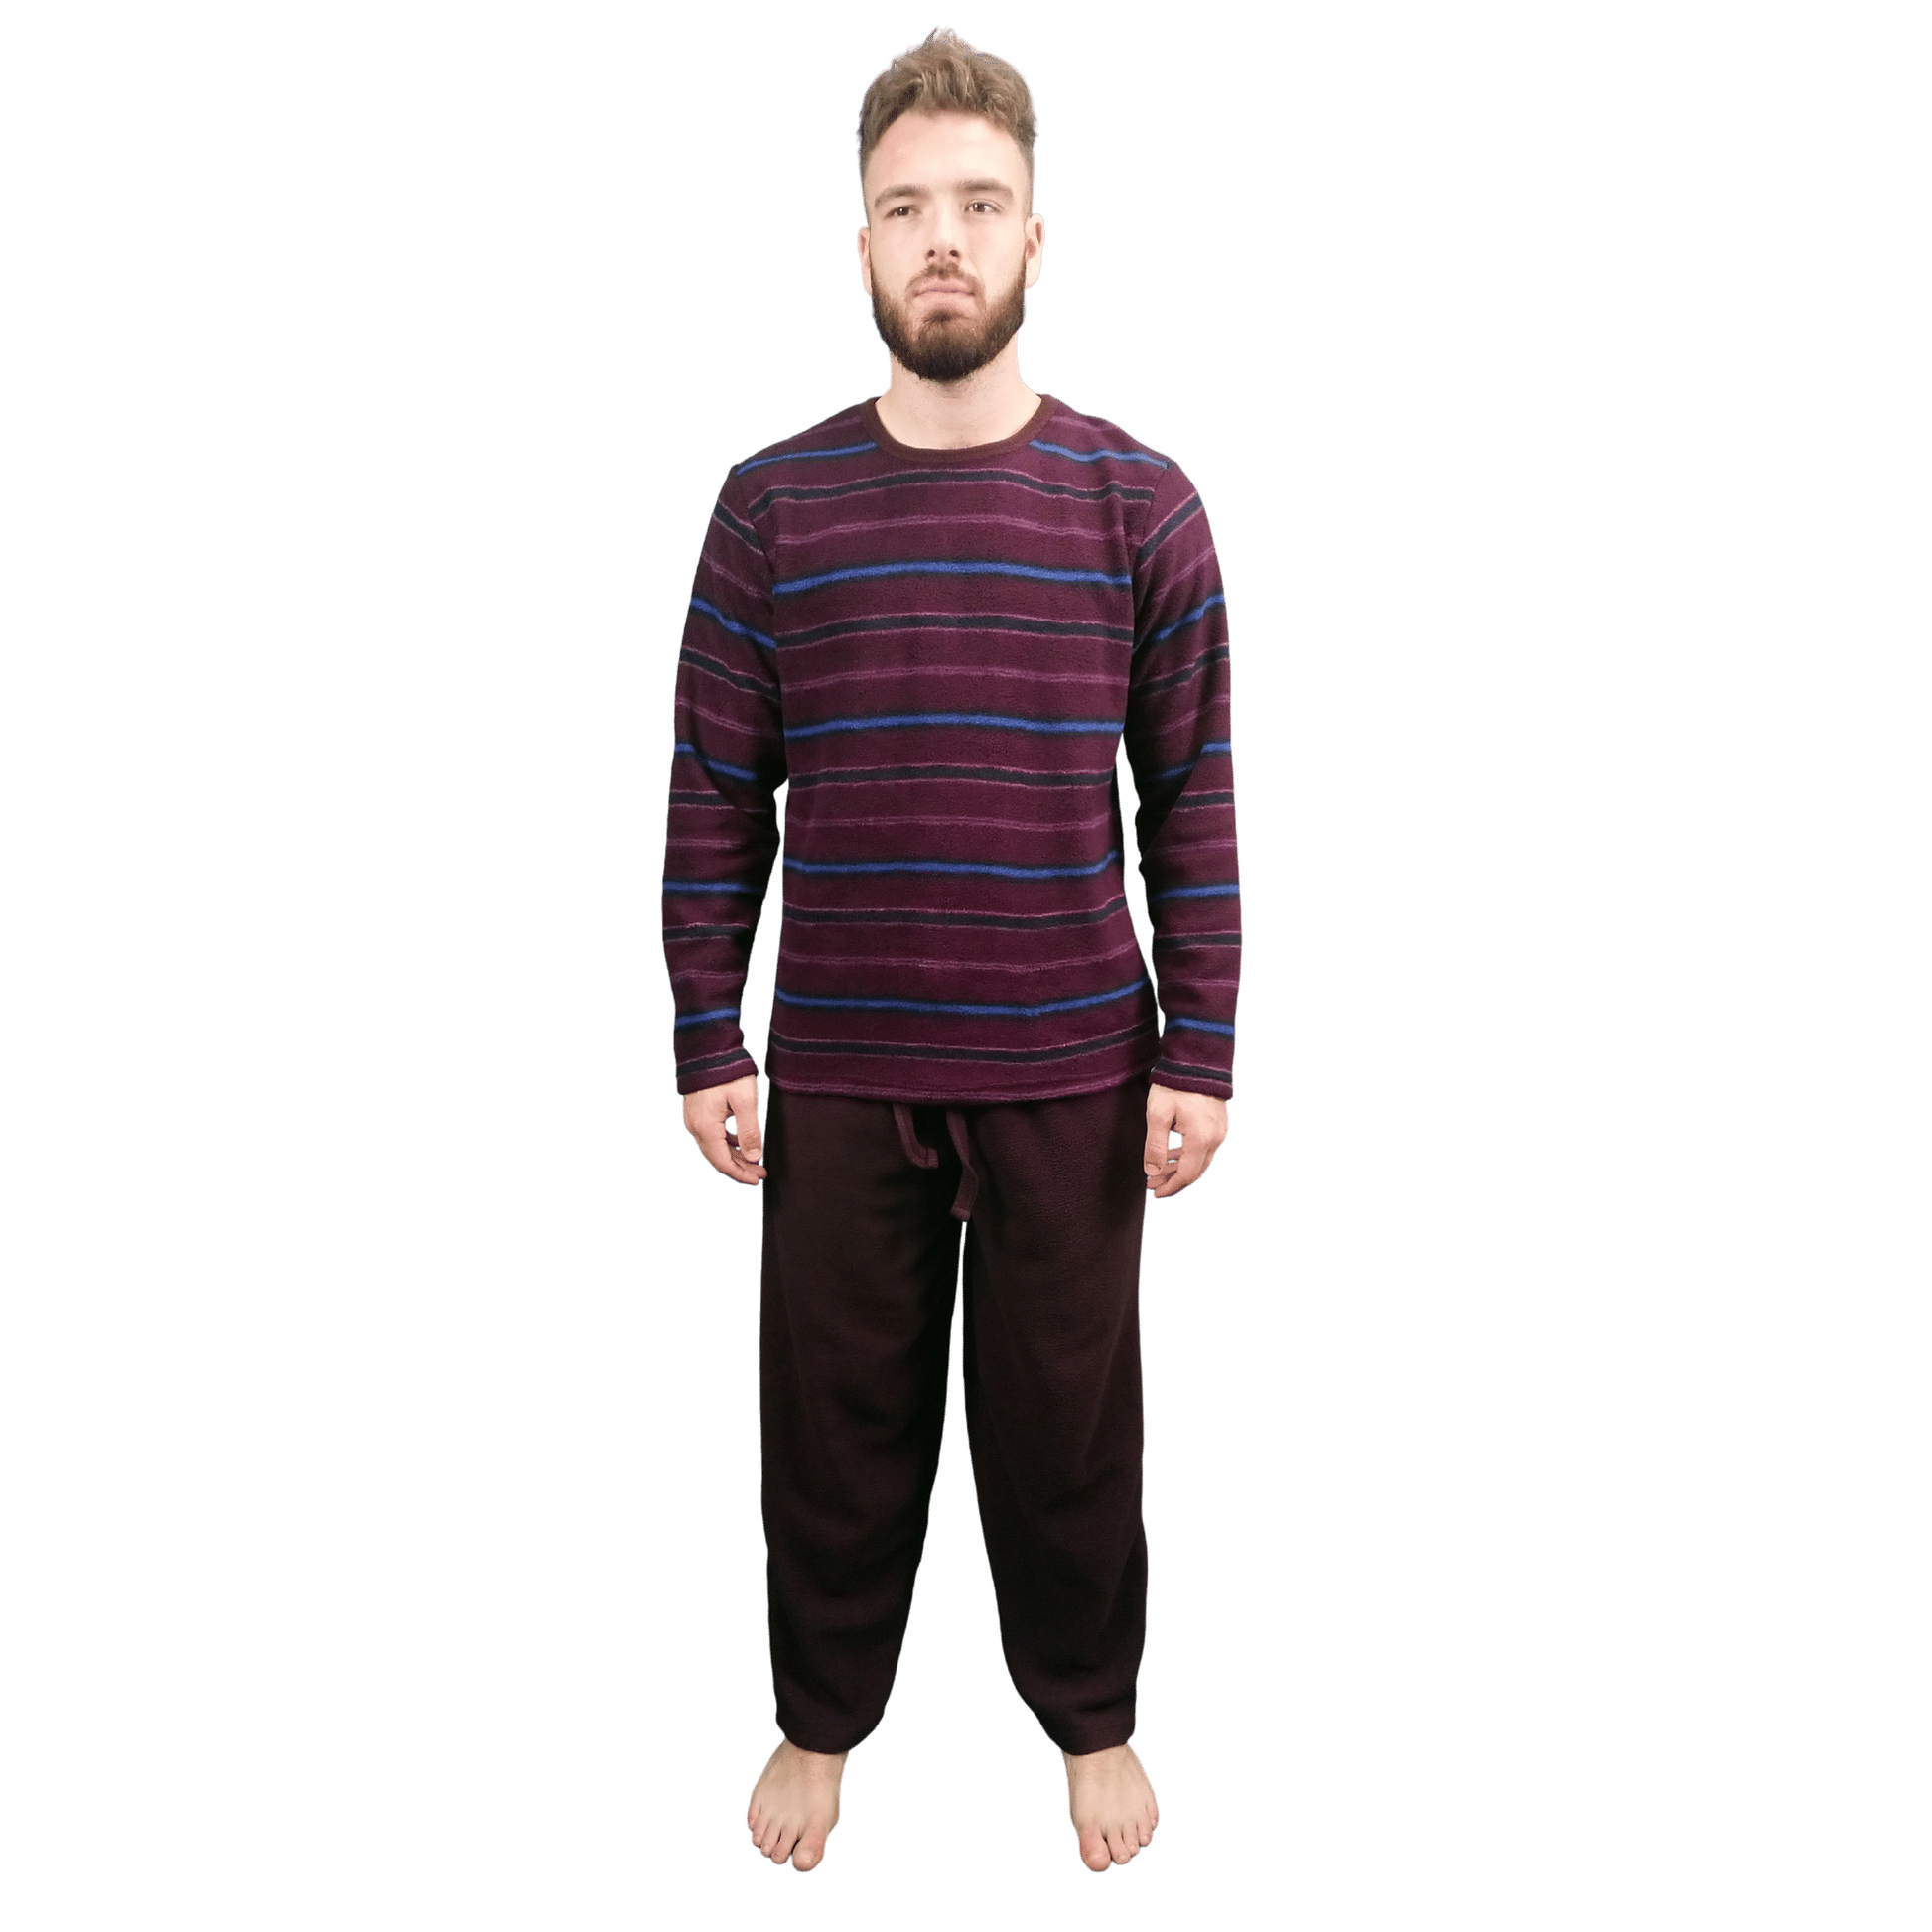 Courage Warm Fleece Mens Pyjamas/Loungewear Set Sleepwear & Loungewear ASASonline